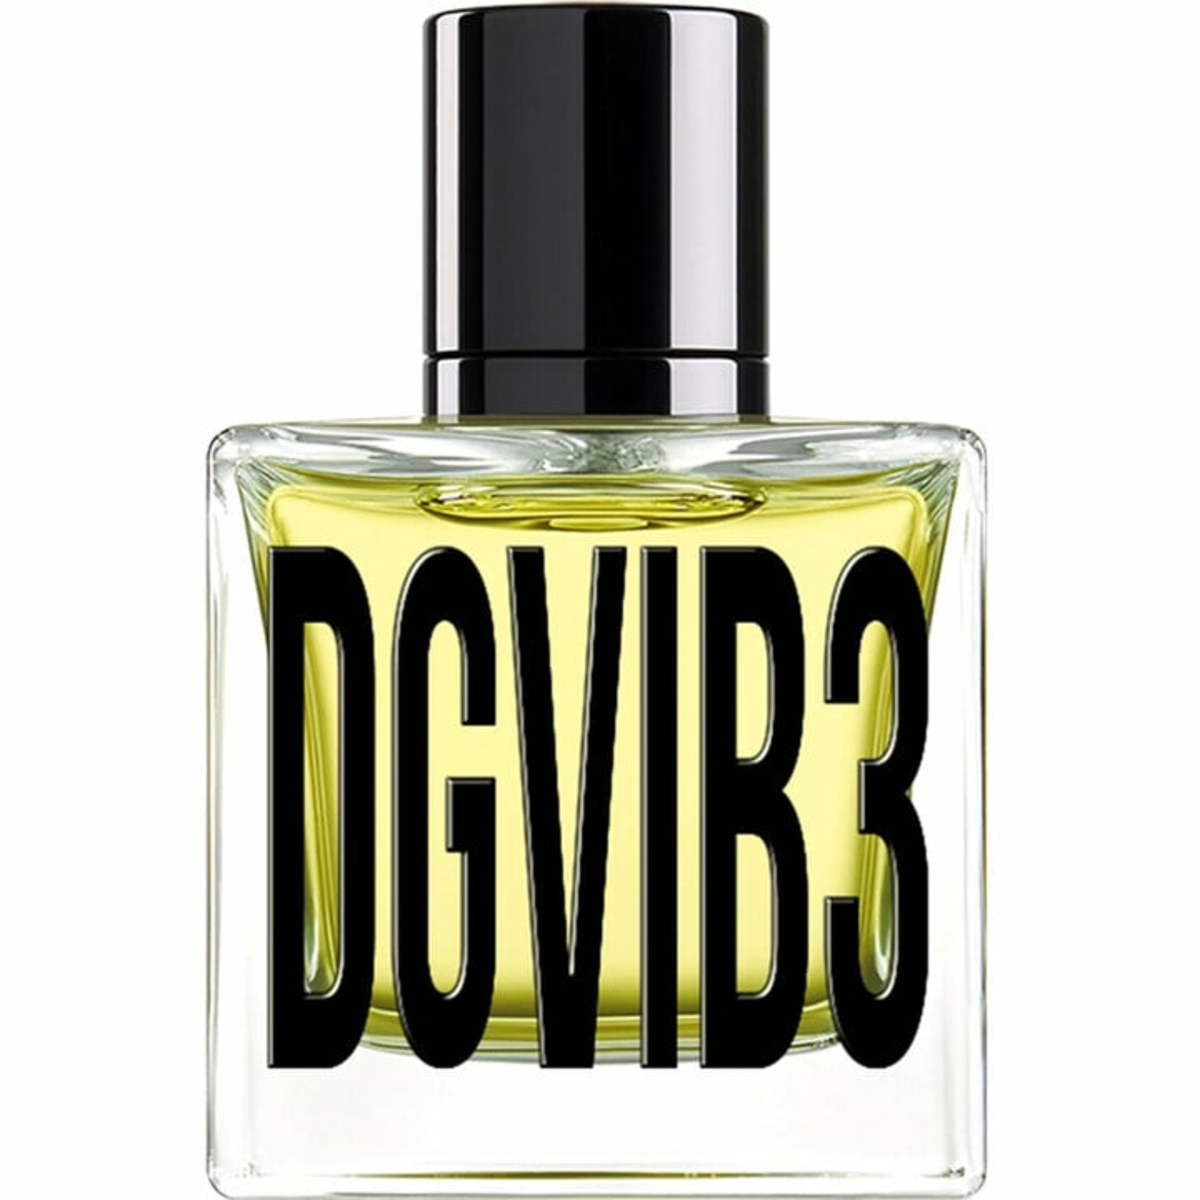 DGVIB3 - Dolce & Gabbana